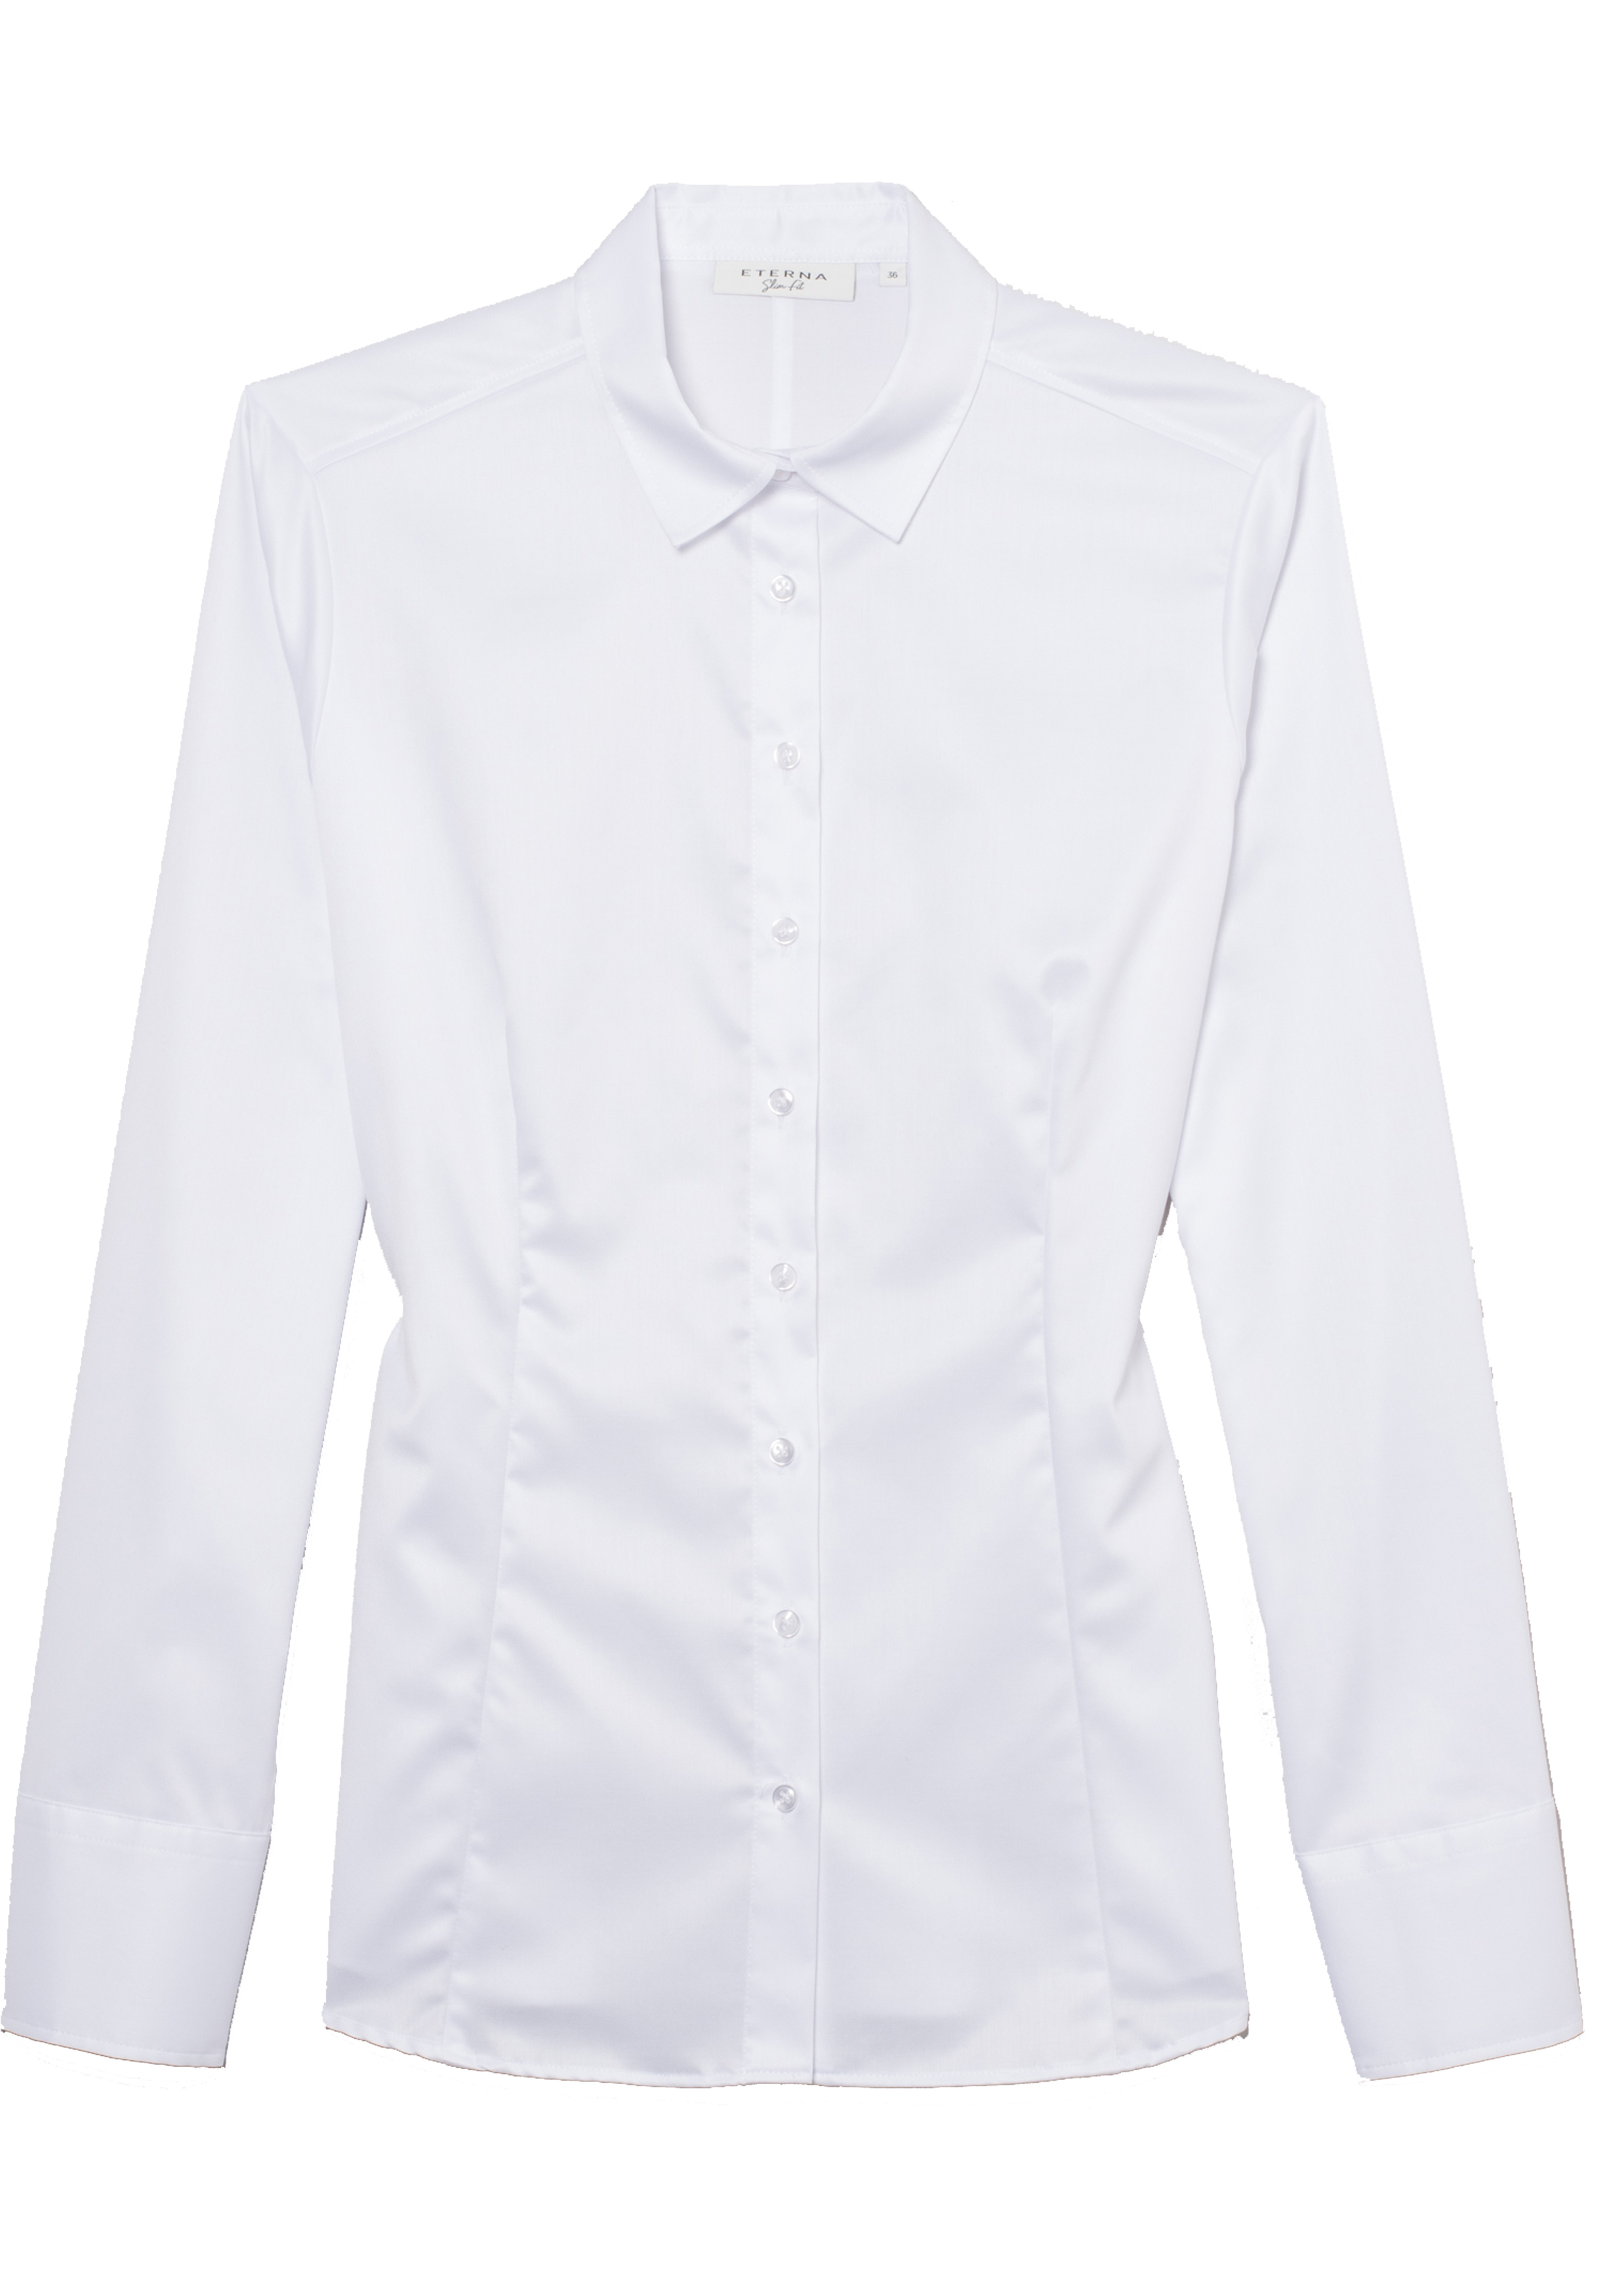 ETERNA dames blouse slim fit, wit